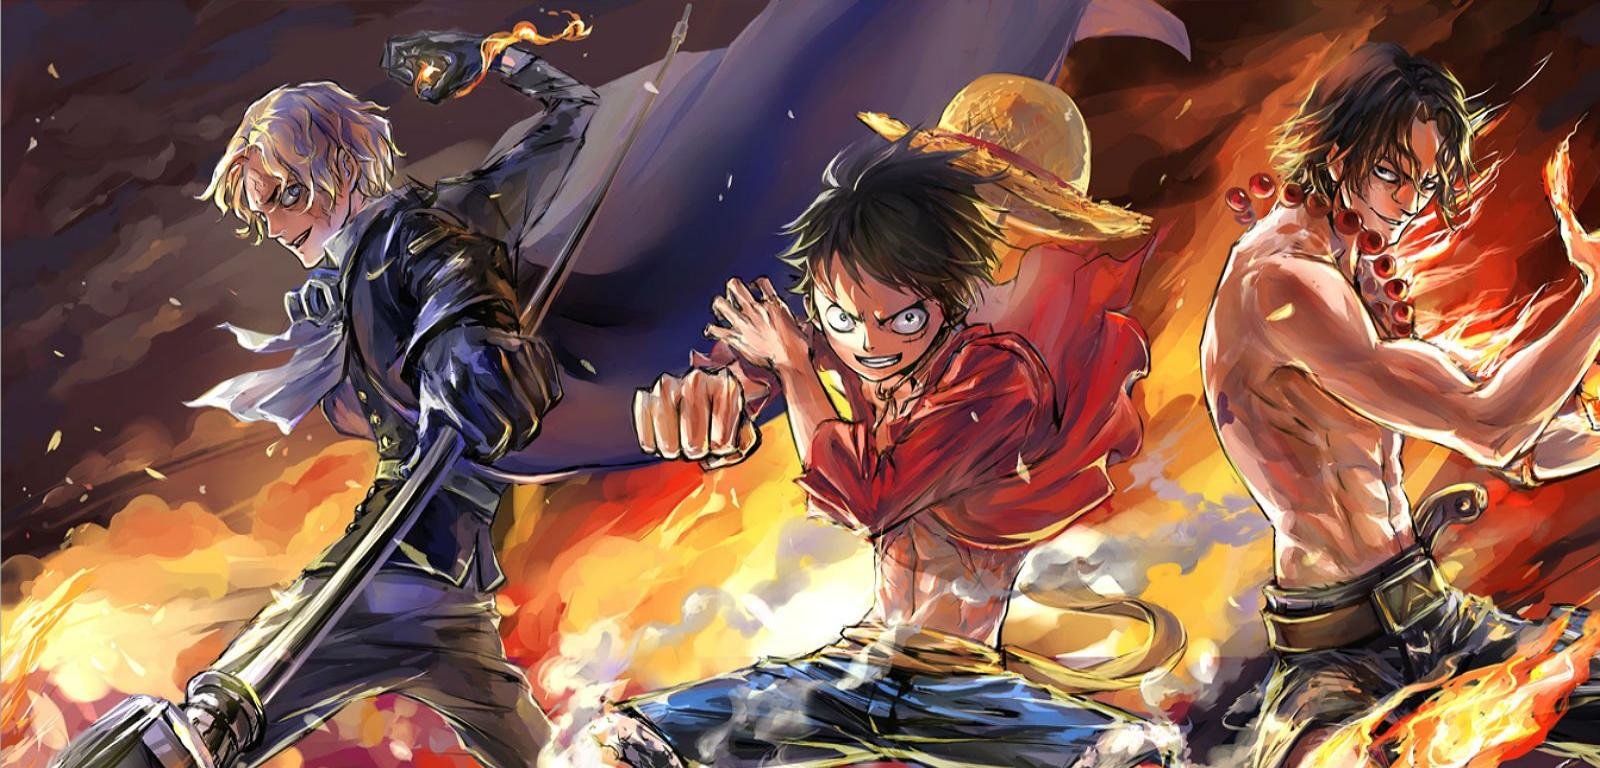 Download Gambar Wallpaper Hd Pc Anime One Piece terbaru 2020